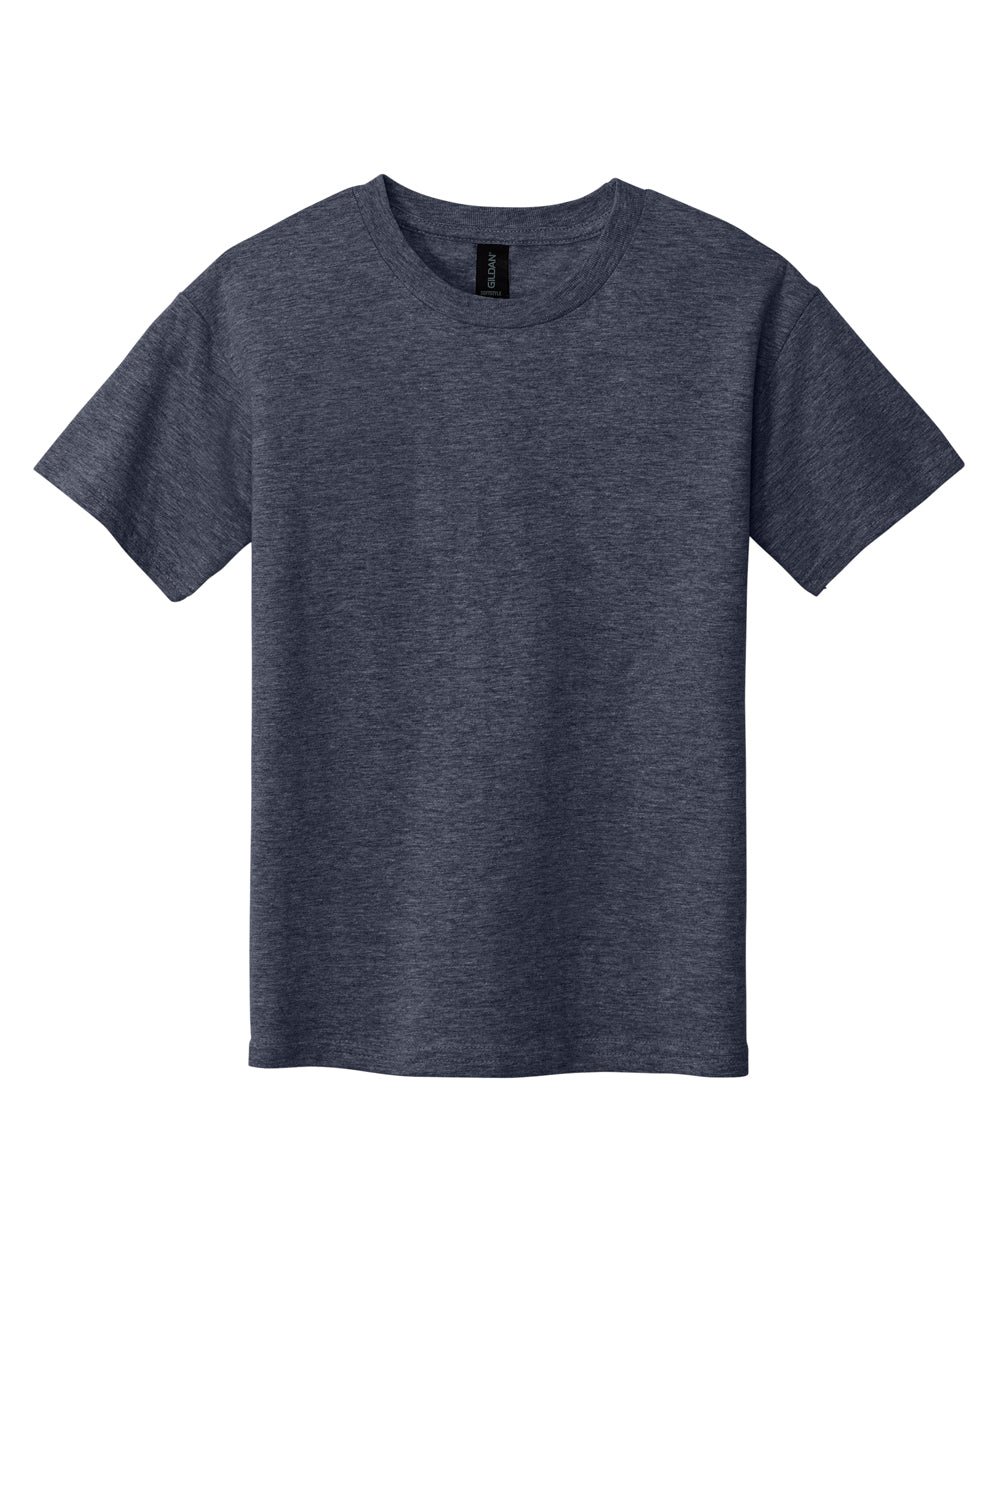 Gildan Youth Softstyle Short Sleeve Crewneck T-Shirt Heather Navy Blue Flat Front